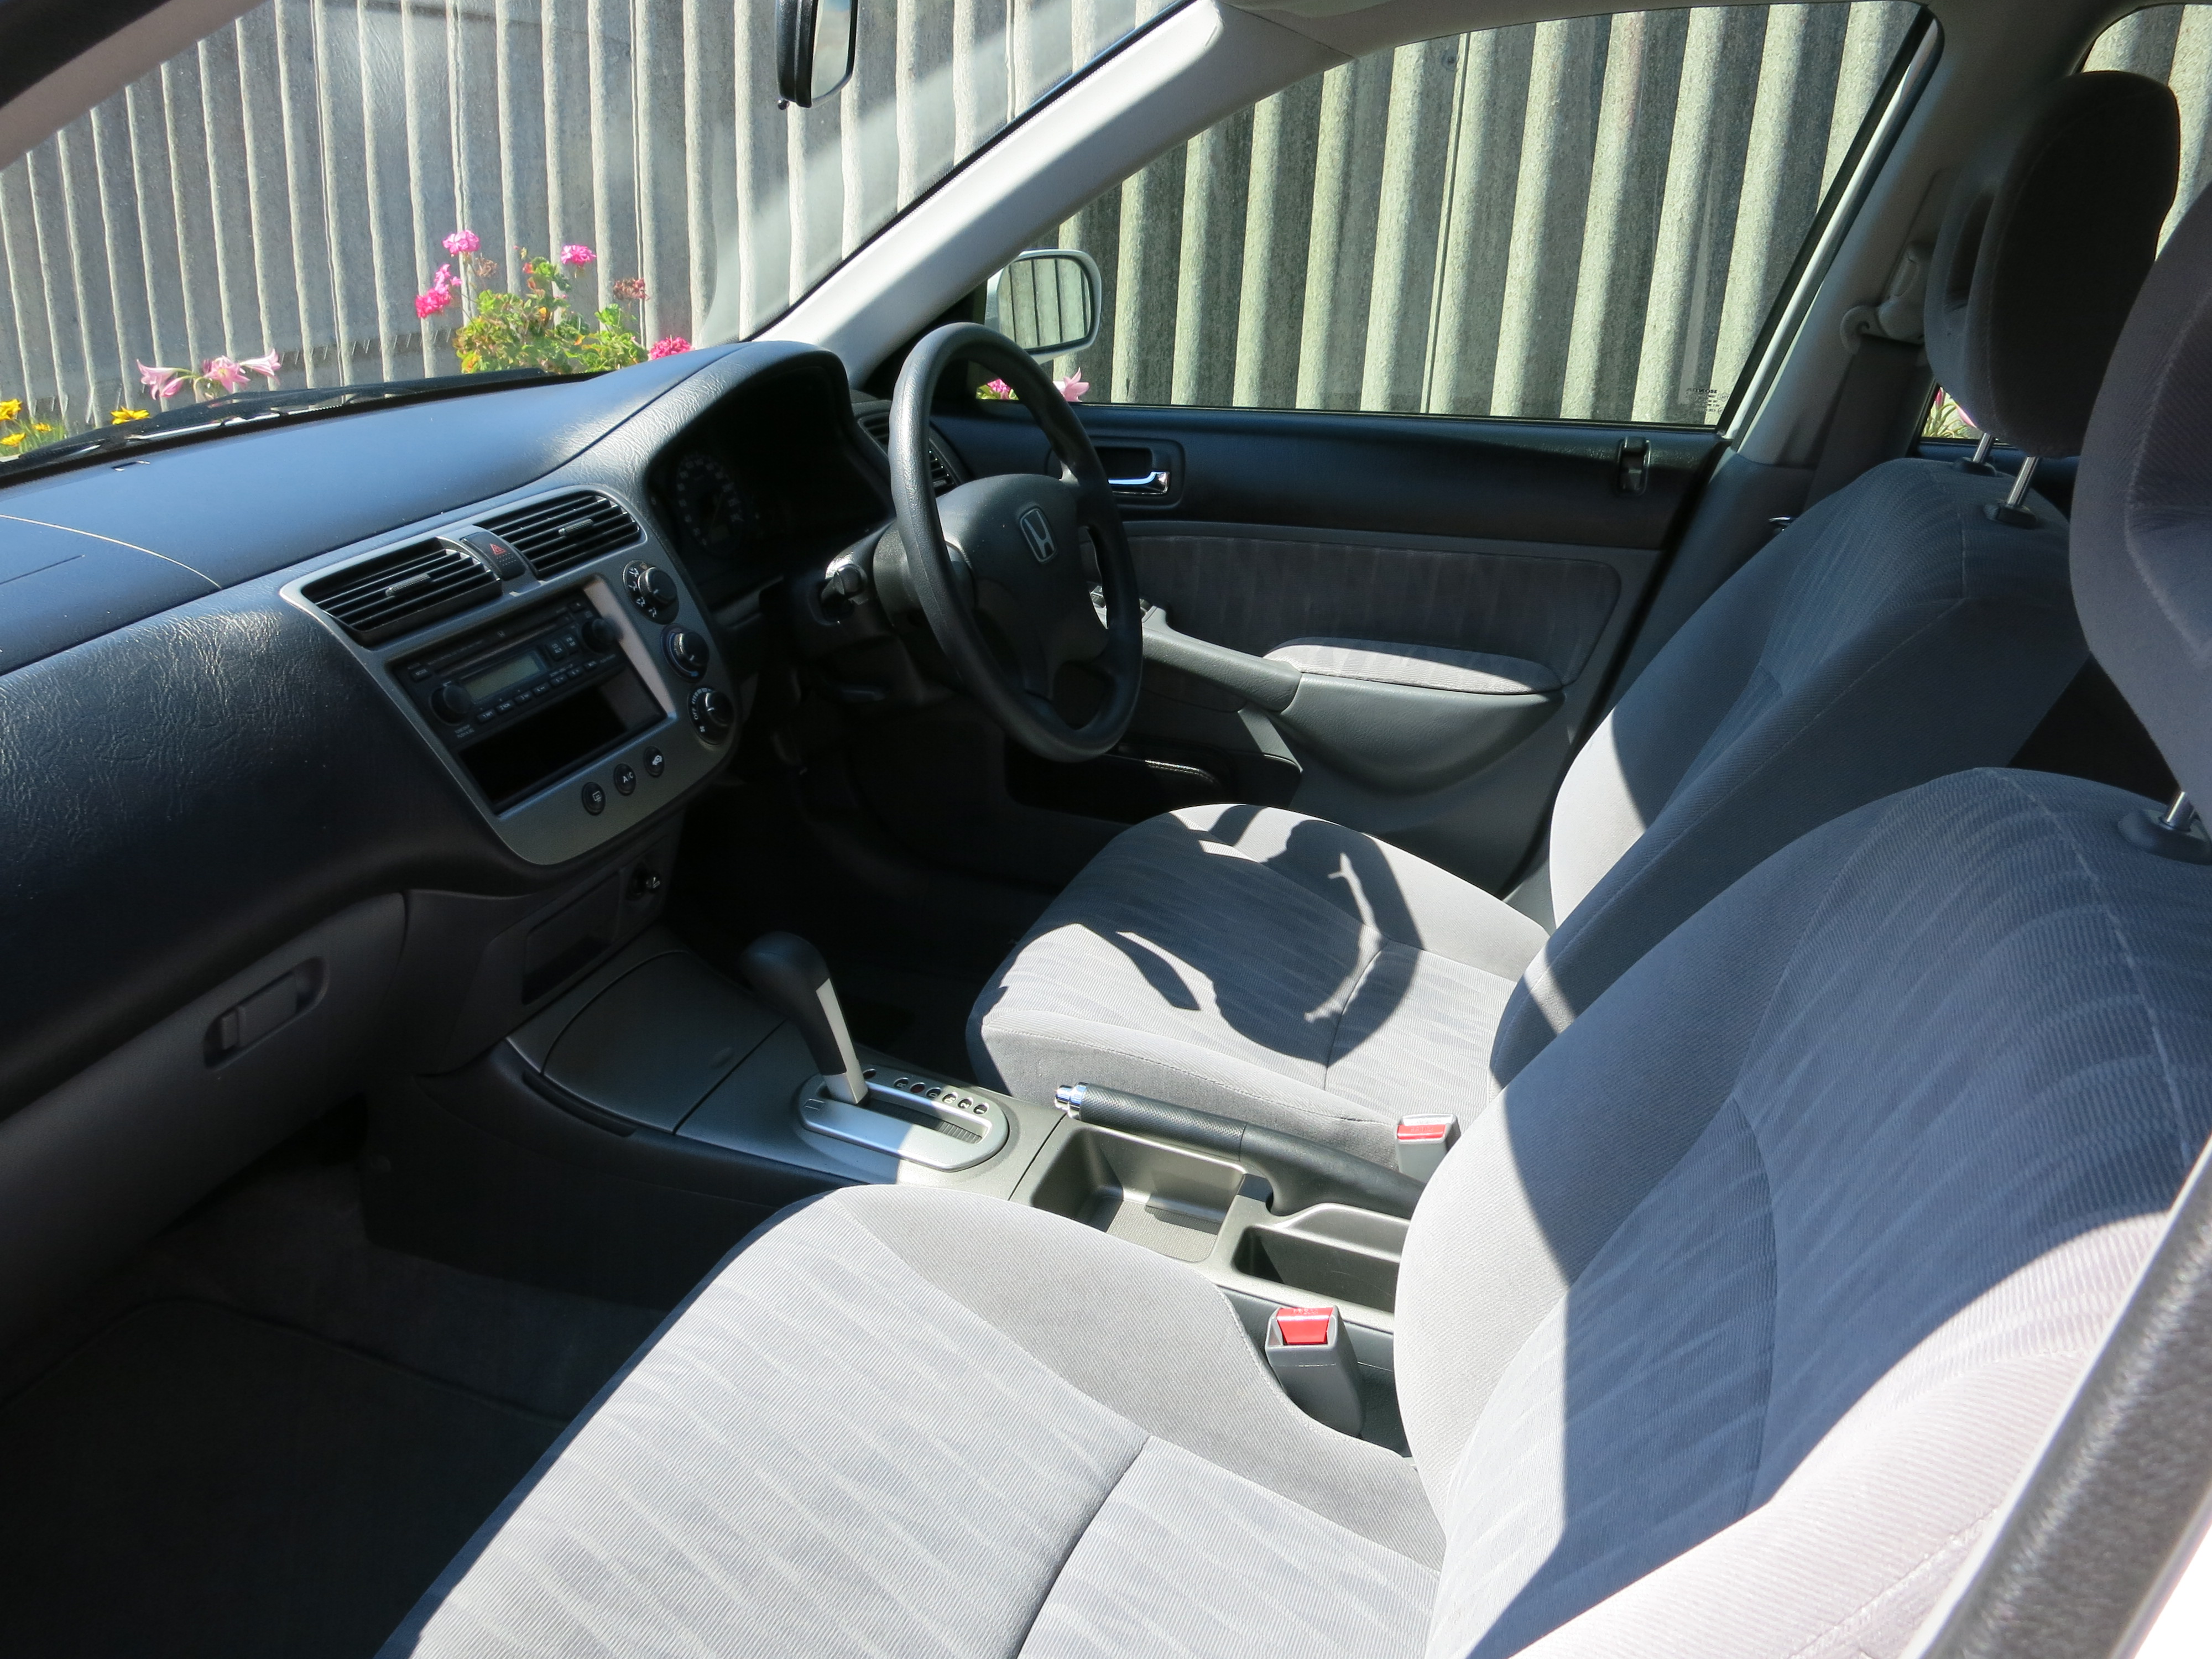 Honda Civic 7th Generation Interior Interior Cabin